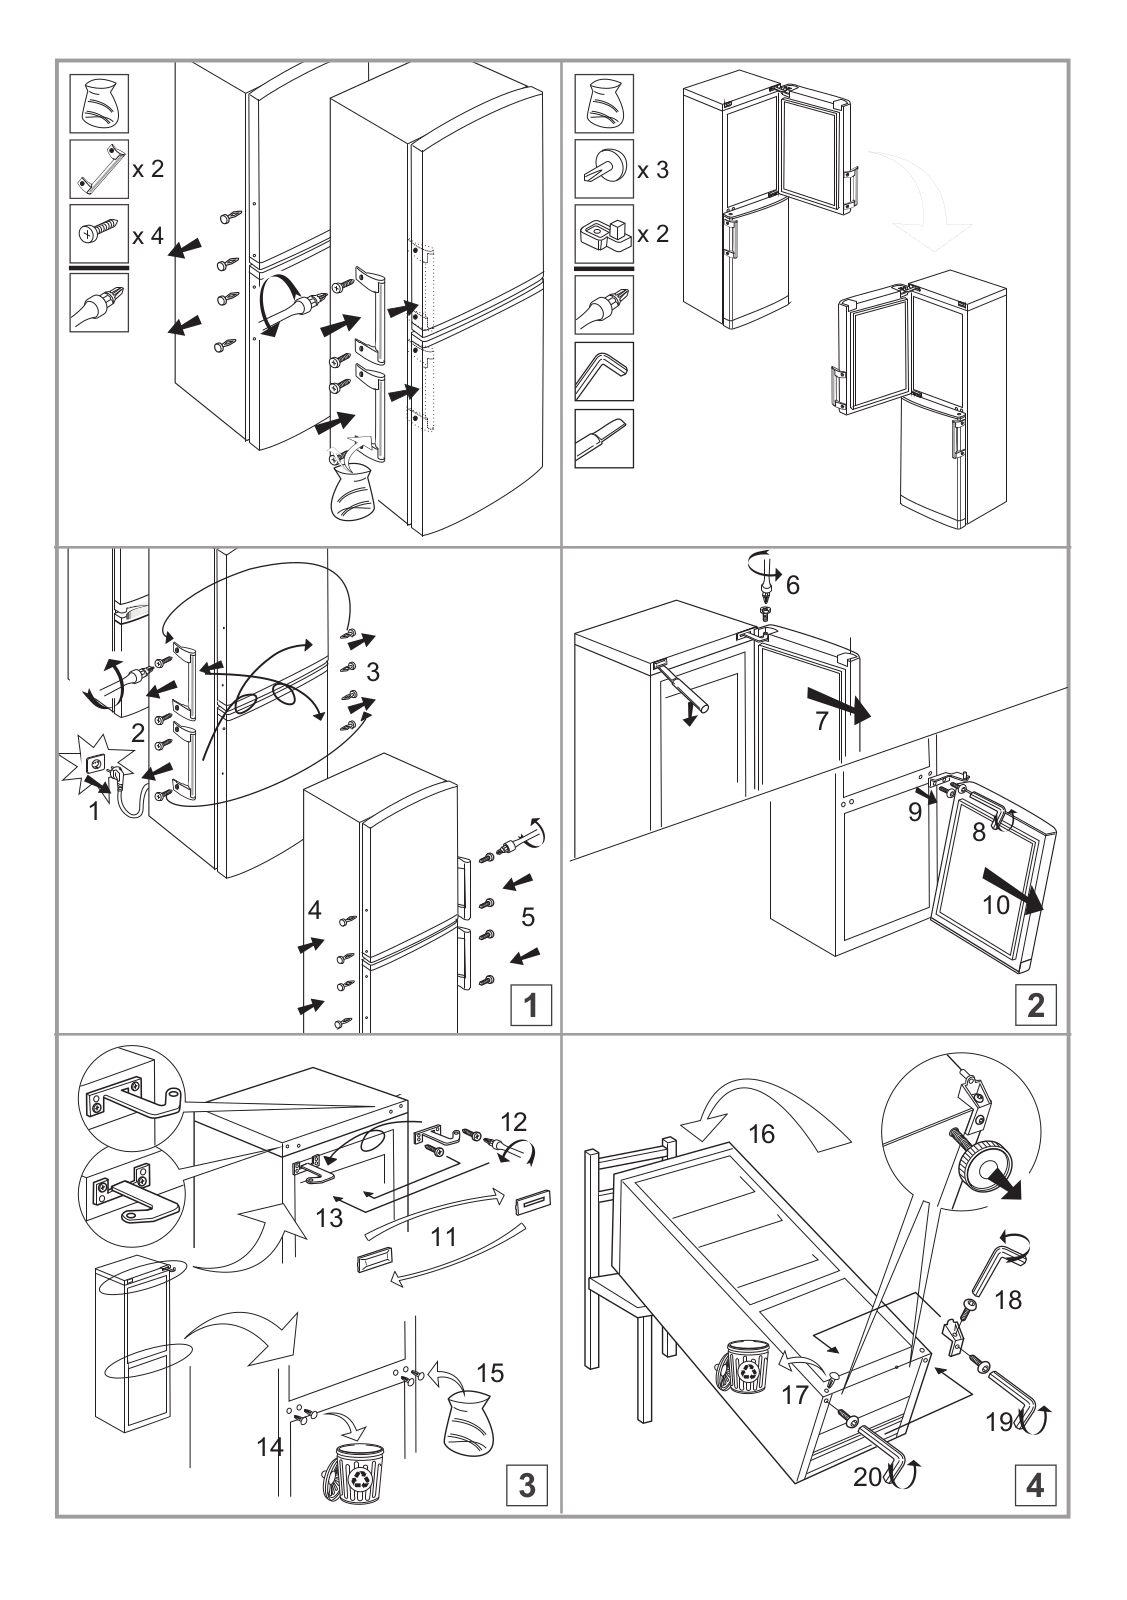 IKEA CFS 171 Installation Instructions